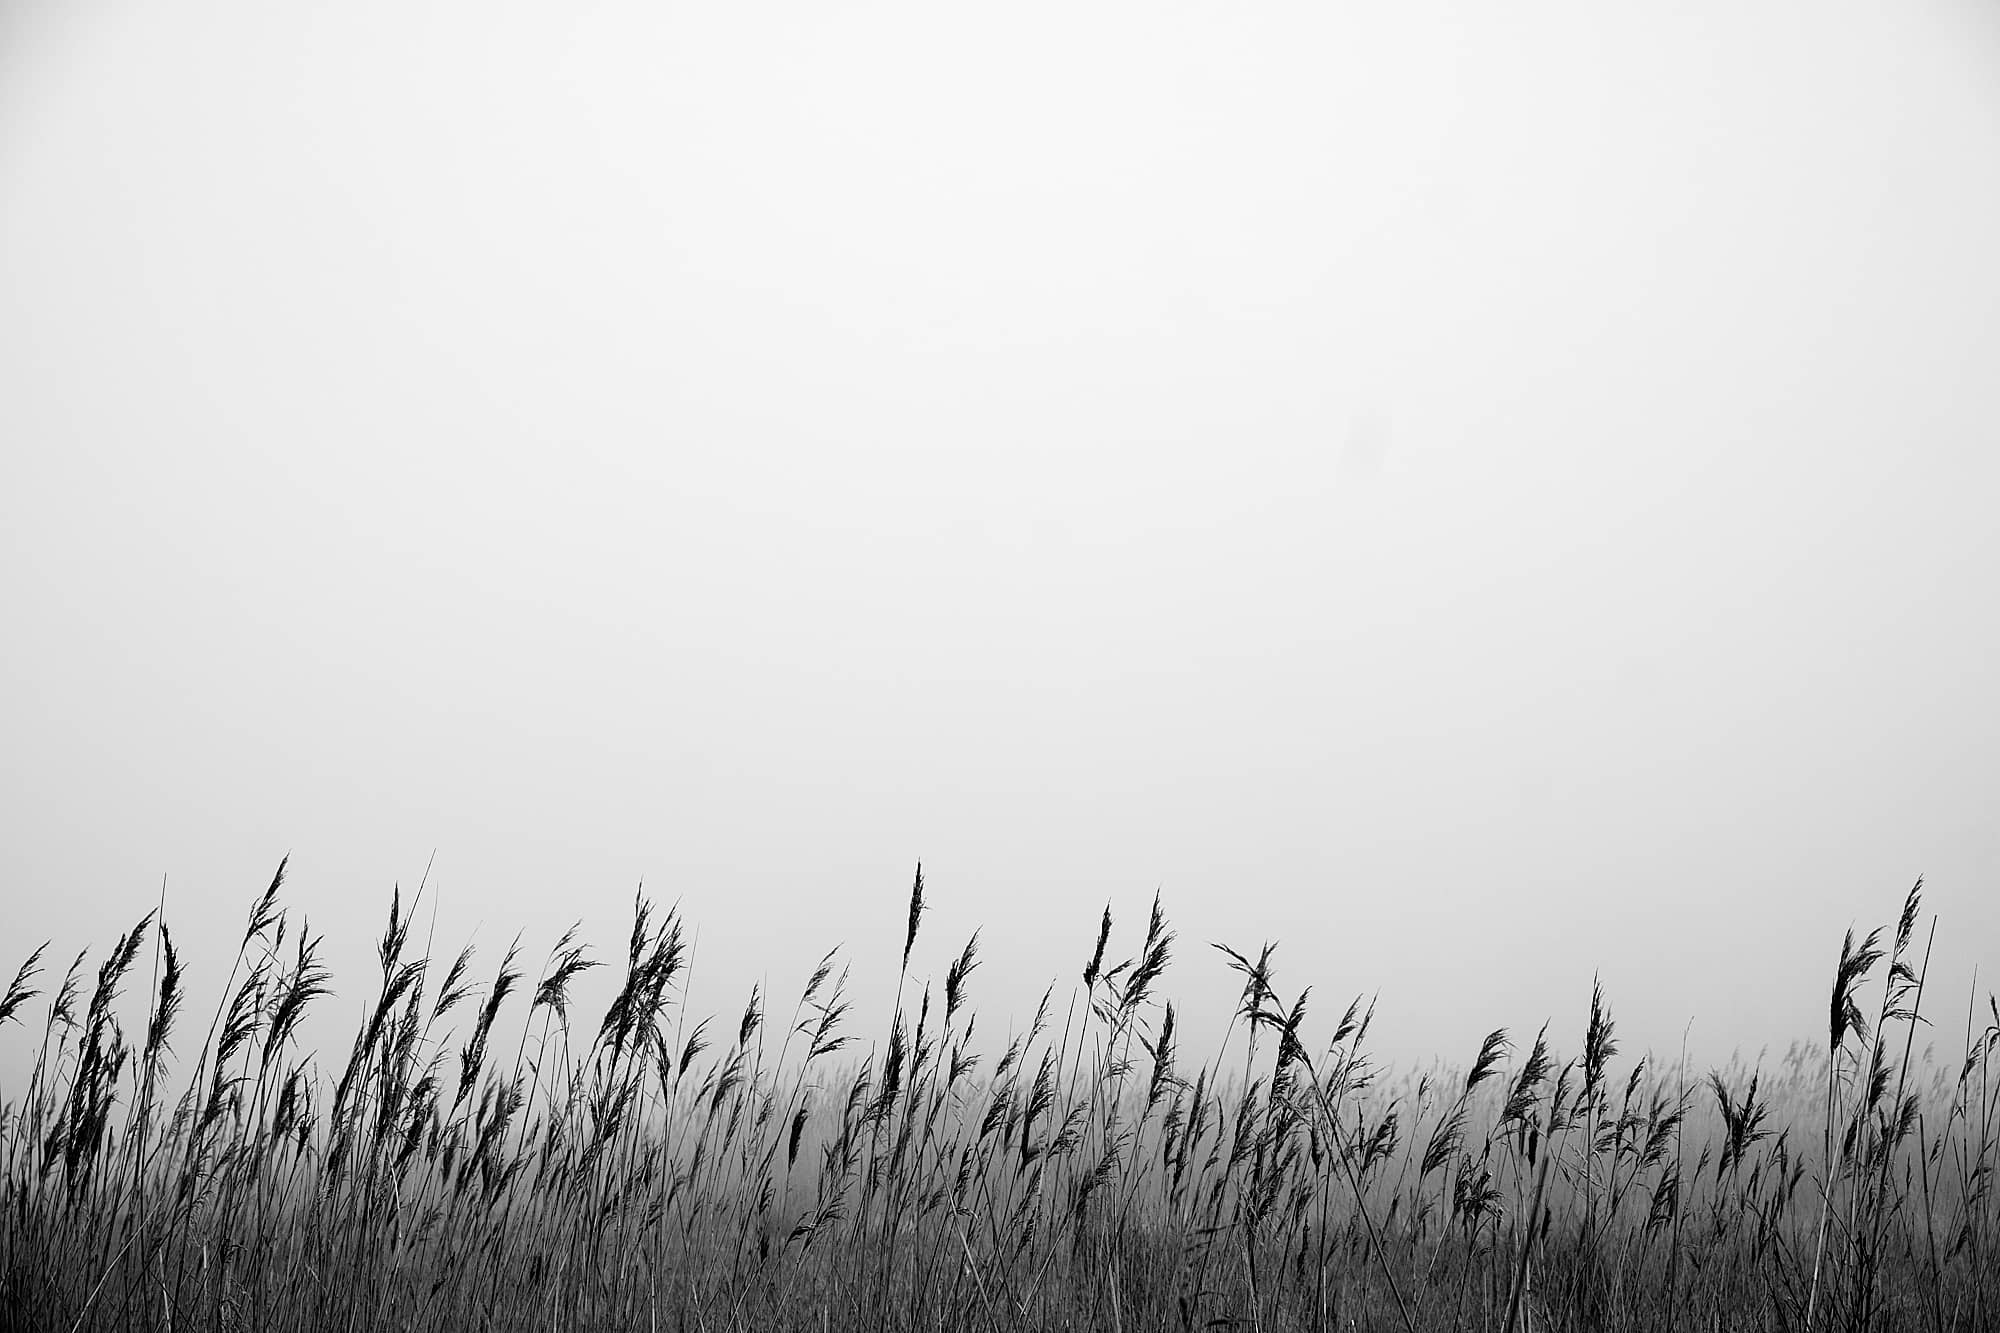 marsh reeds against the grey sky